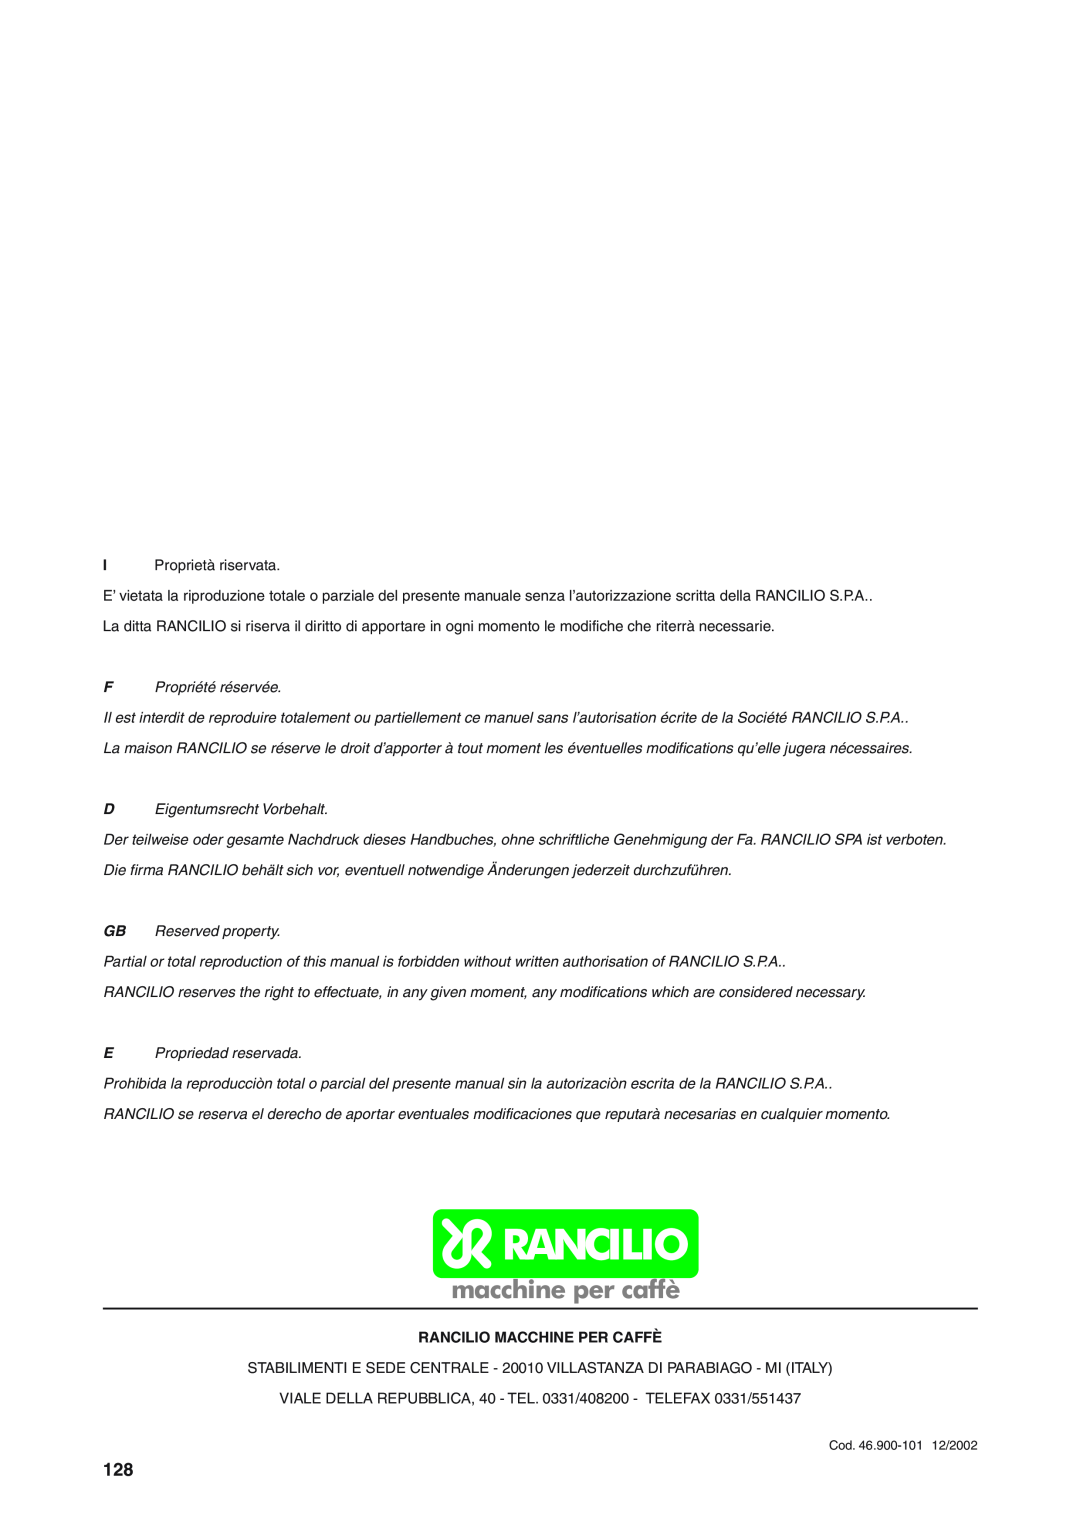 Rancilio S20 manual F Propriété réservée, D Eigentumsrecht Vorbehalt, GB Reserved property, E Propriedad reservada 